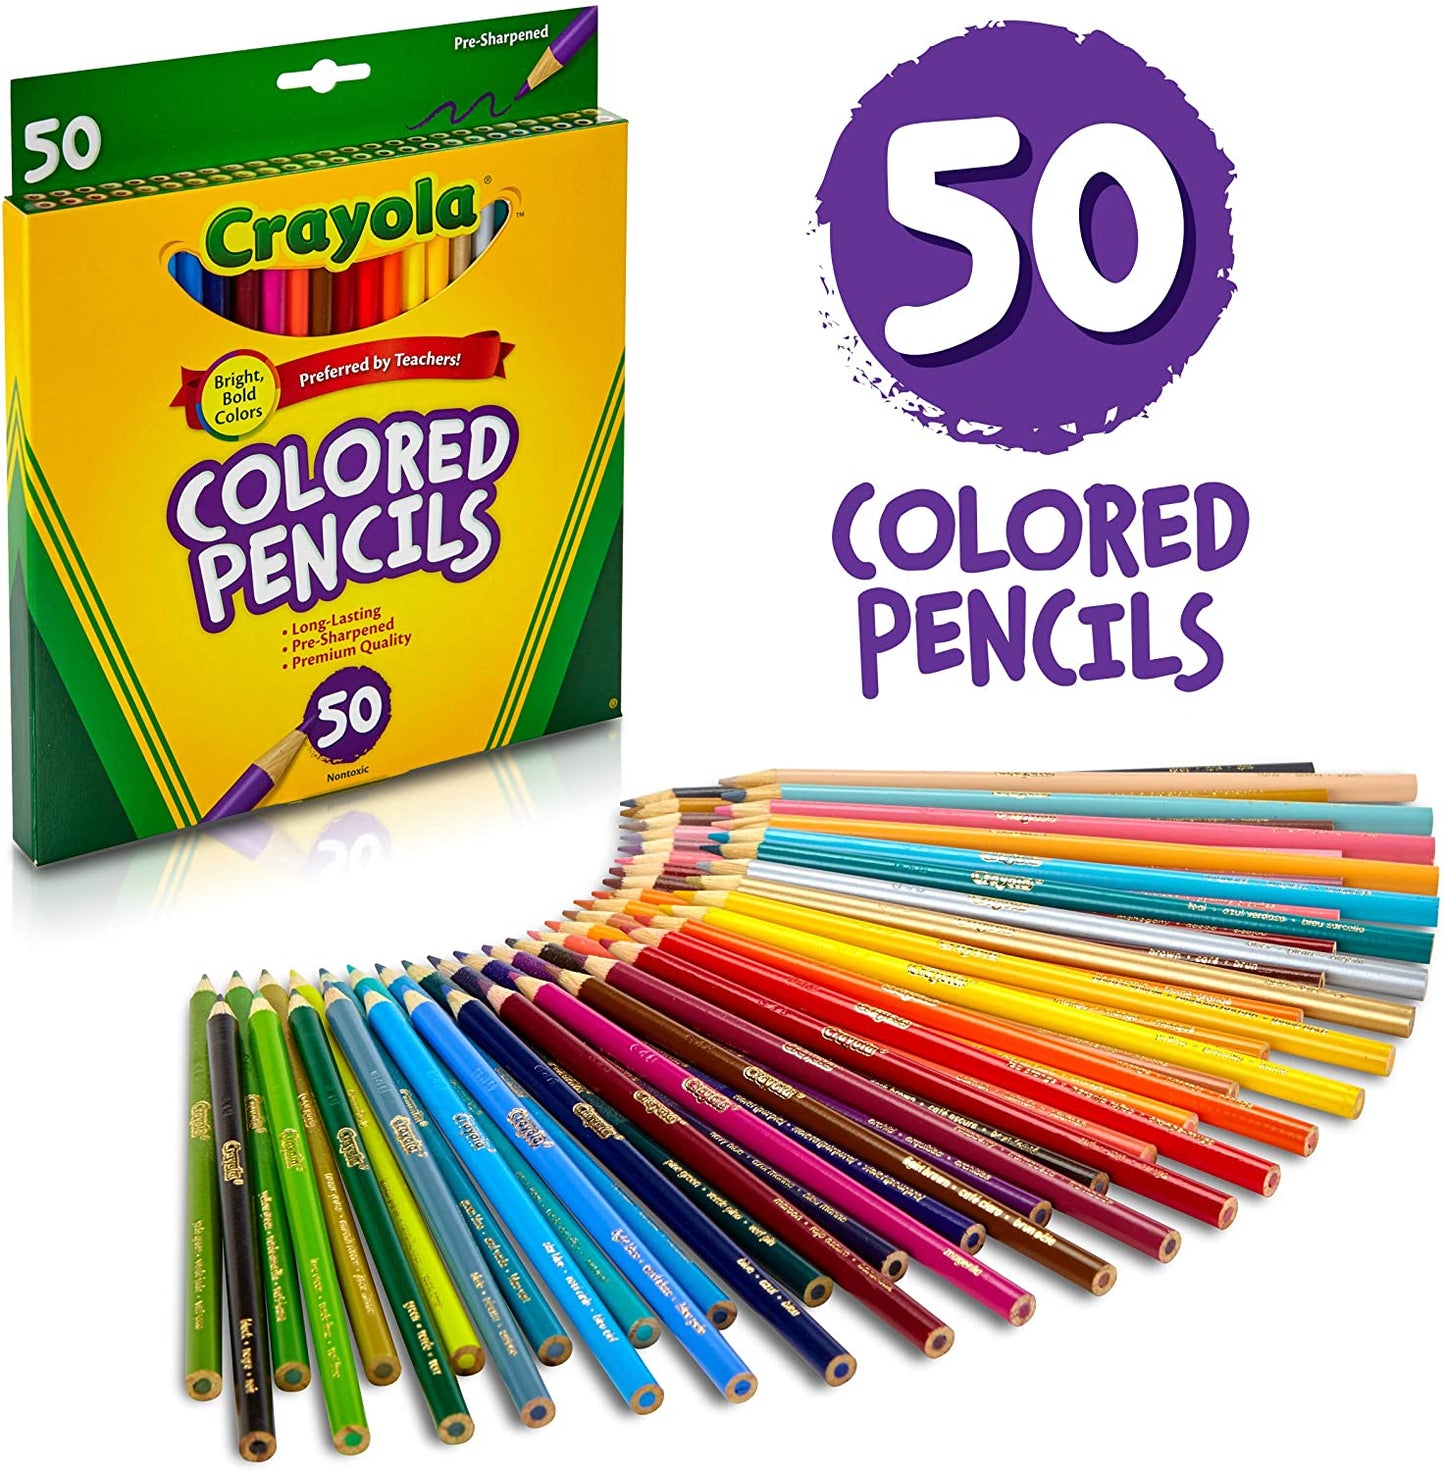 Crayola brand colored pencils, 50 units